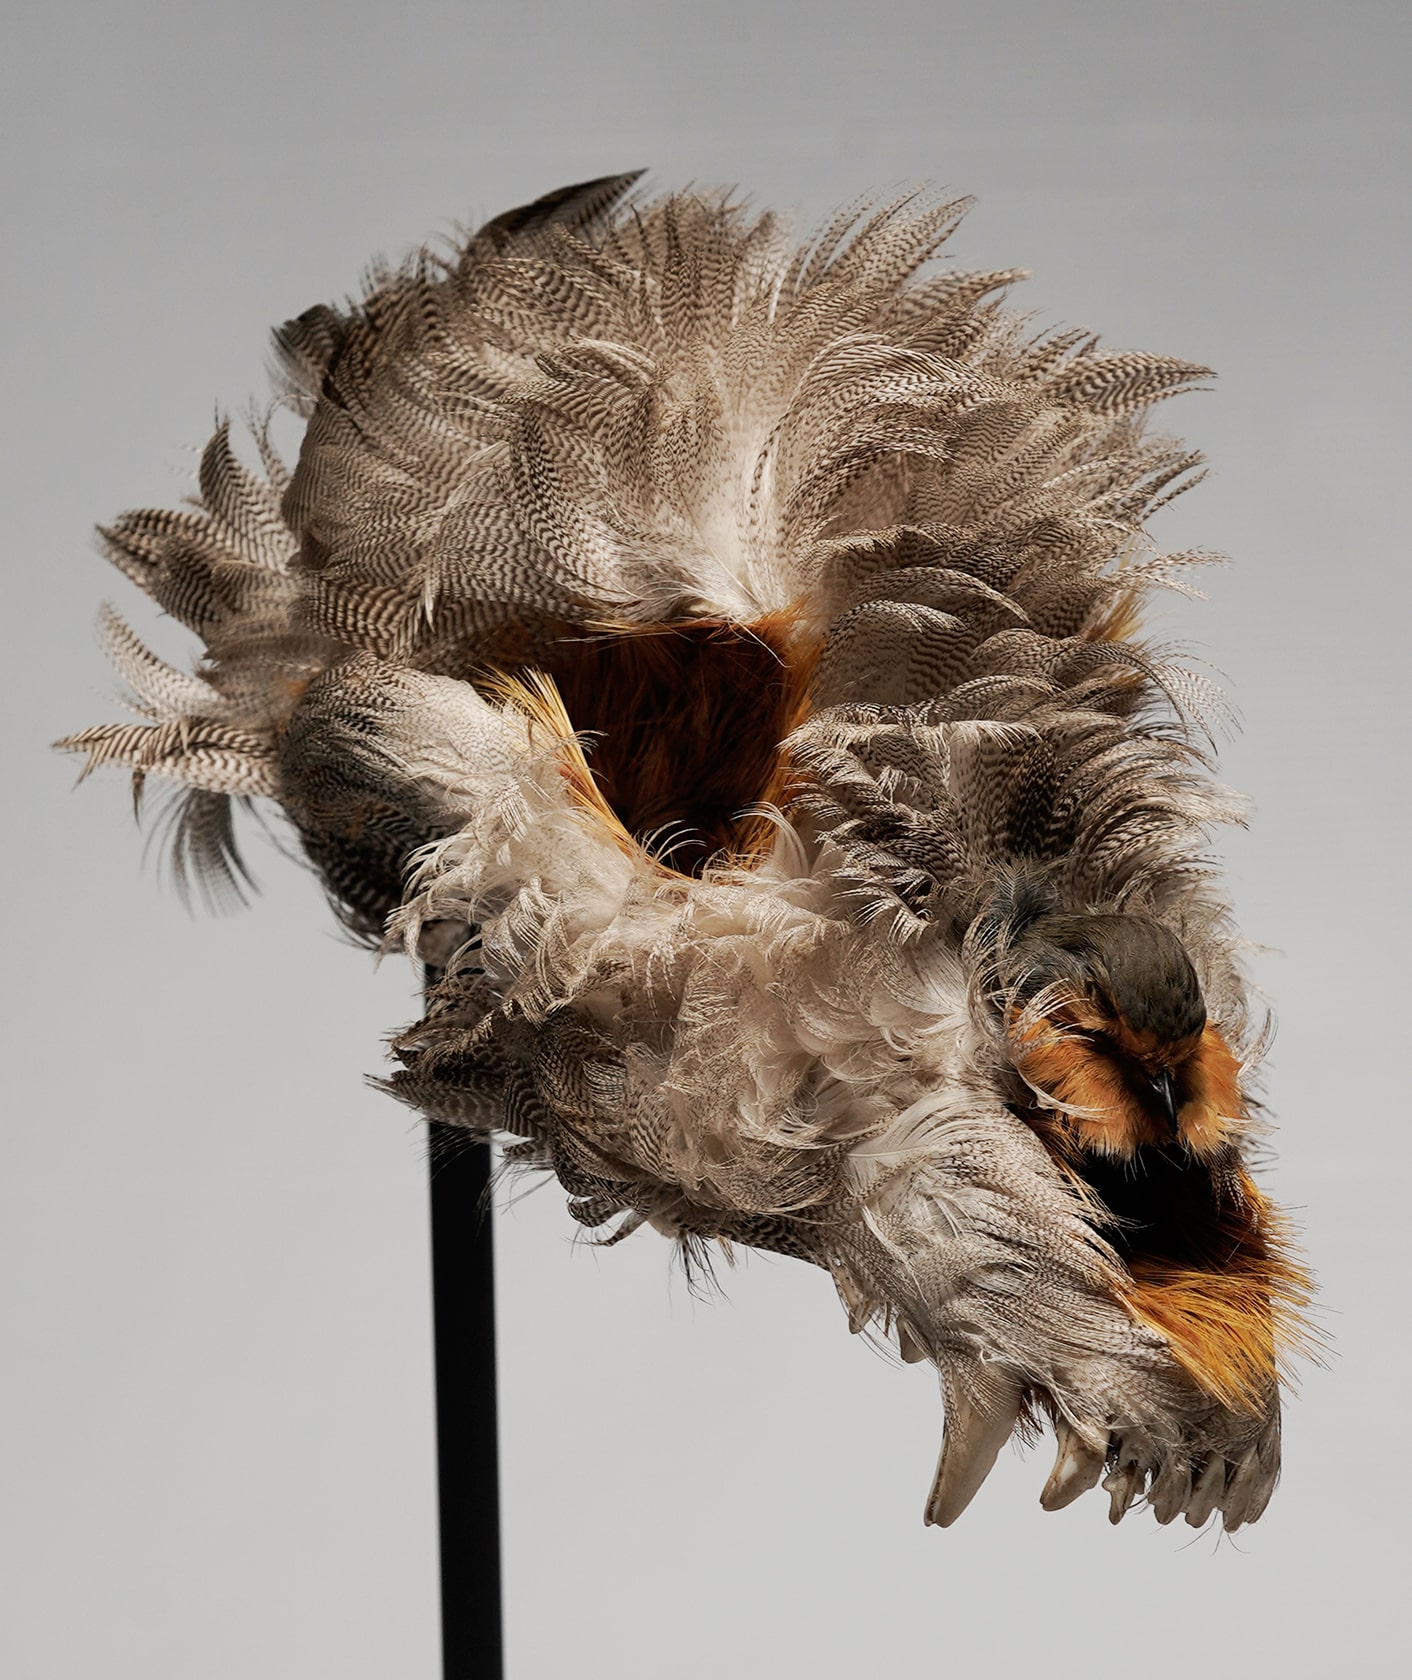 plumas-anade-faisan-dorado-petirrojo-craneo-perro-escultura-sculpture-mallard-golden-pheasant-robin-feathers-dog-skull